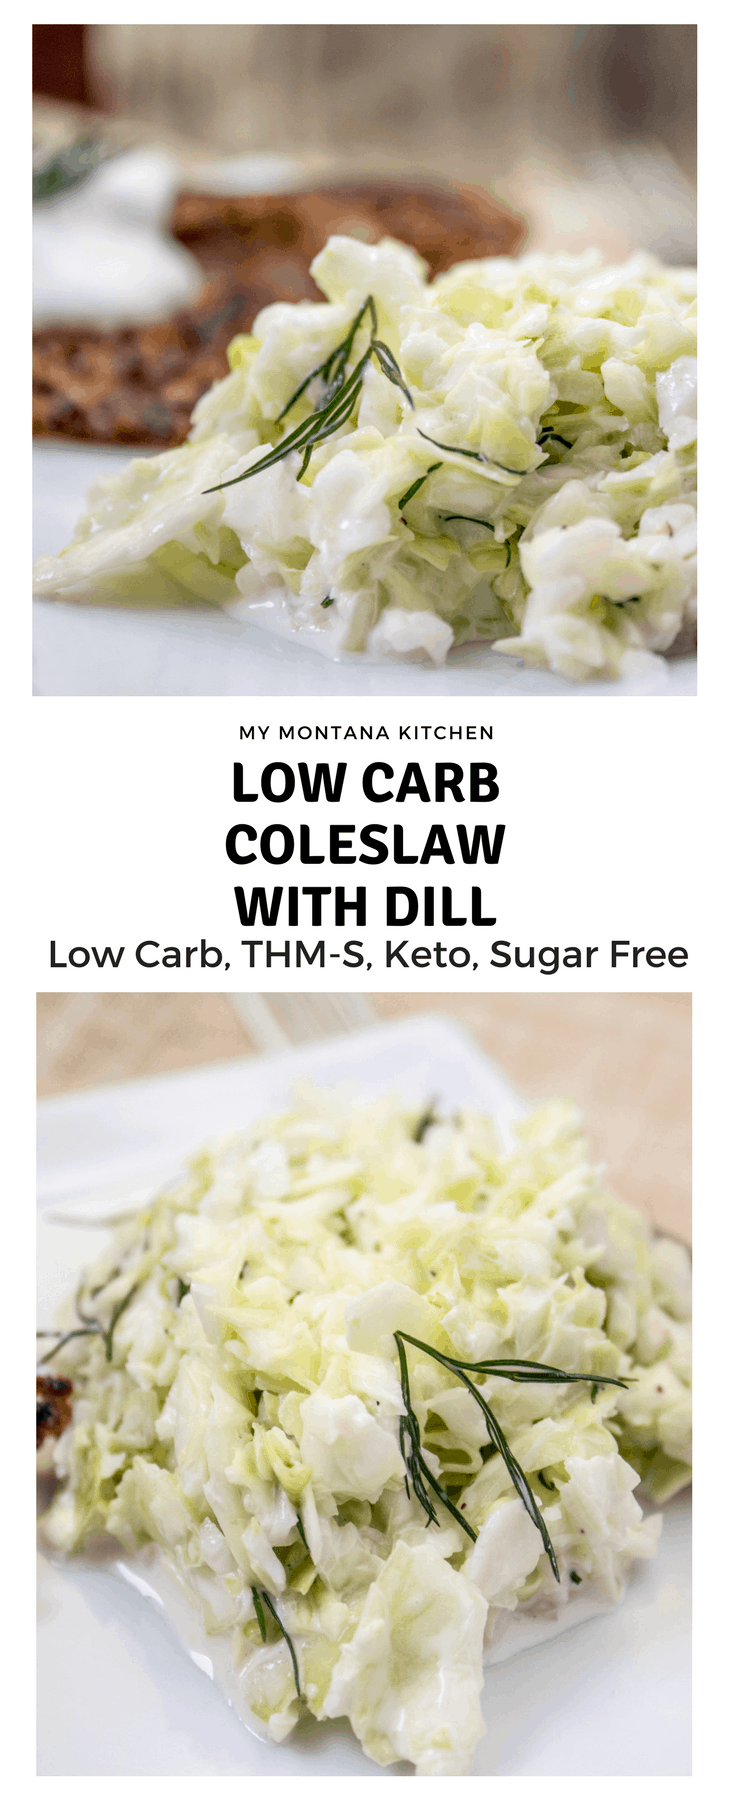 Low Carb Coleslaw with Dill (THM-S, Keto, Sugar Free) #trimhealthymama #thm #thms #coleslaw #thmsidedish #keto #lowcarb #sugarfree #coleslaw